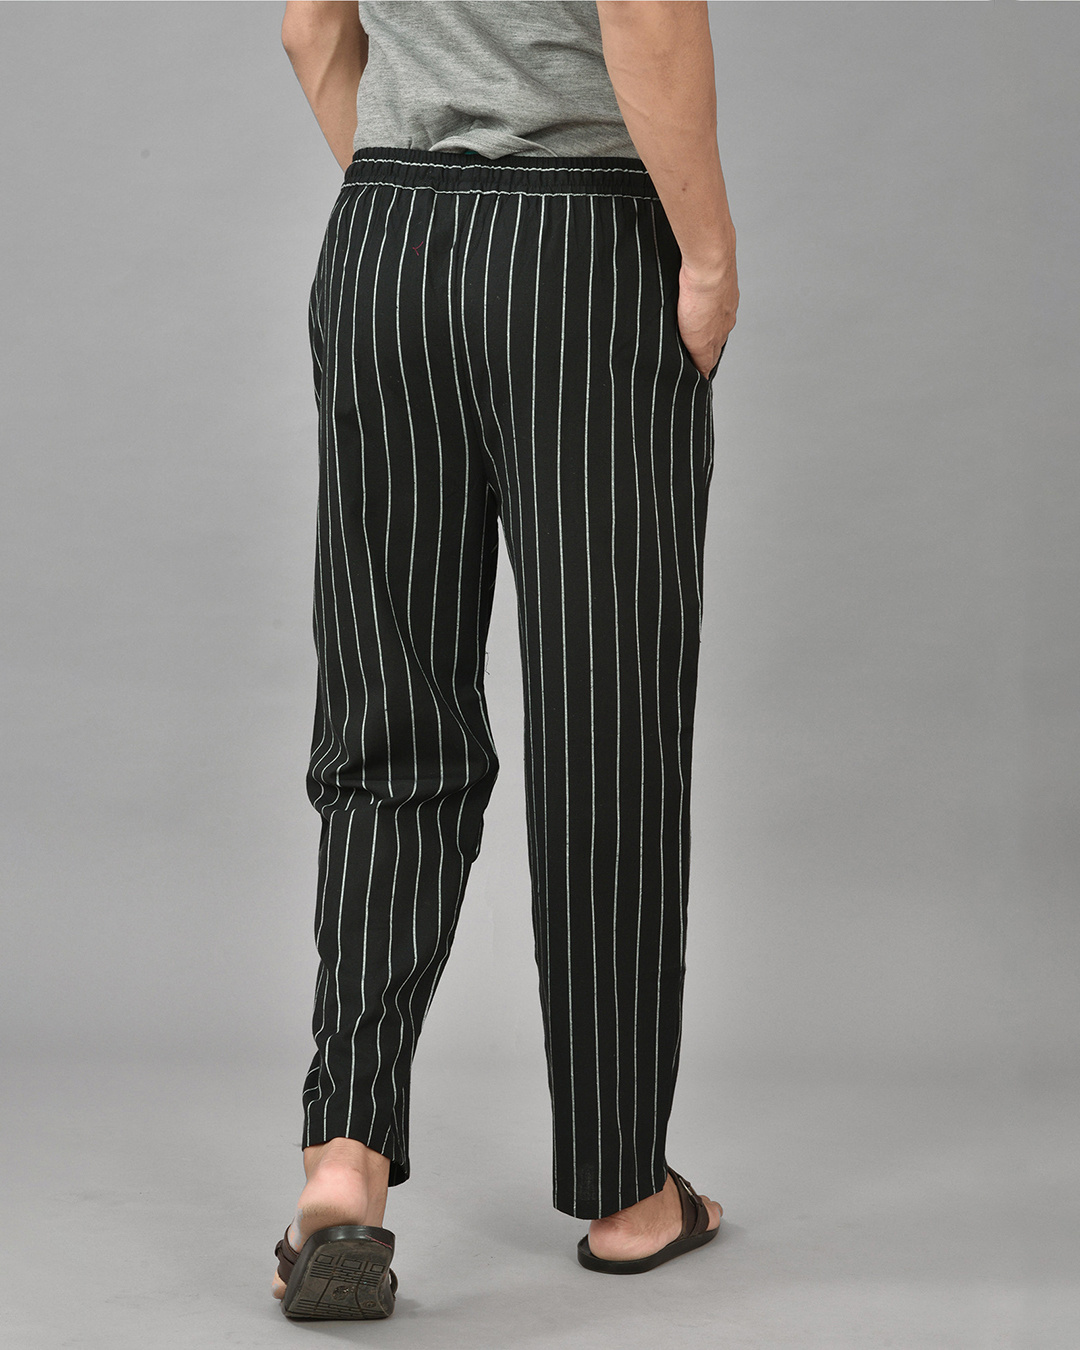 Urban Ranger by Pantaloons Black Cotton Slim Fit Striped Trousers